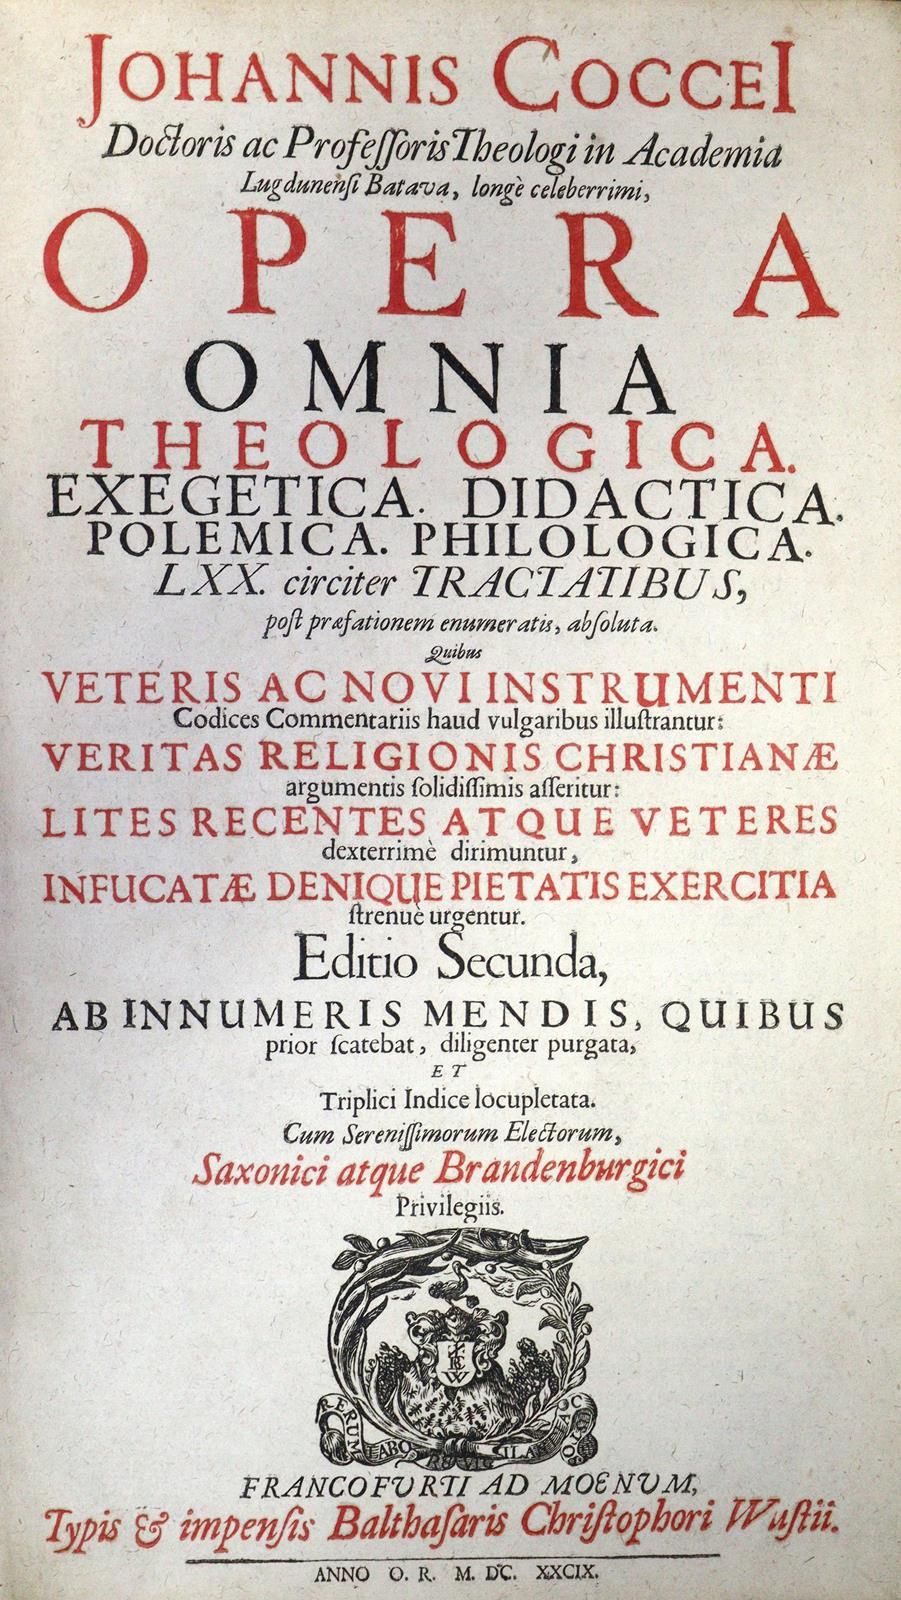 Coccejus,J. Opera omnia theologica, exegetica, didattica, polemica, filologica. &hellip;